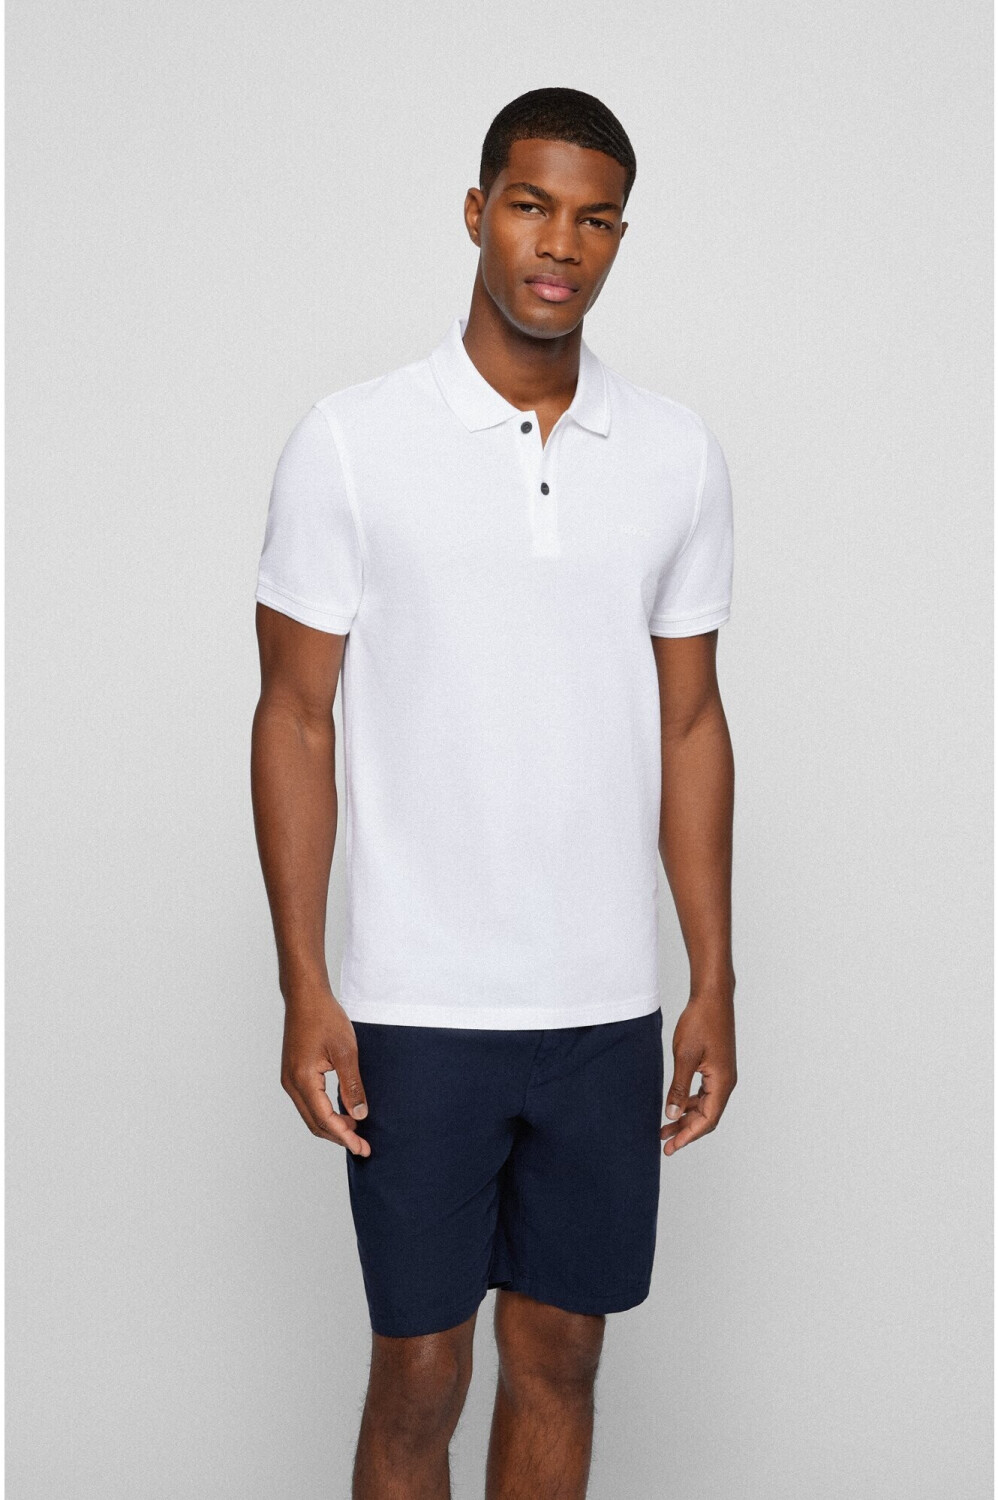 Hugo Boss Prime Slim-Fit Poloshirt (50468576-100) white ab 48,00 € |  Preisvergleich bei